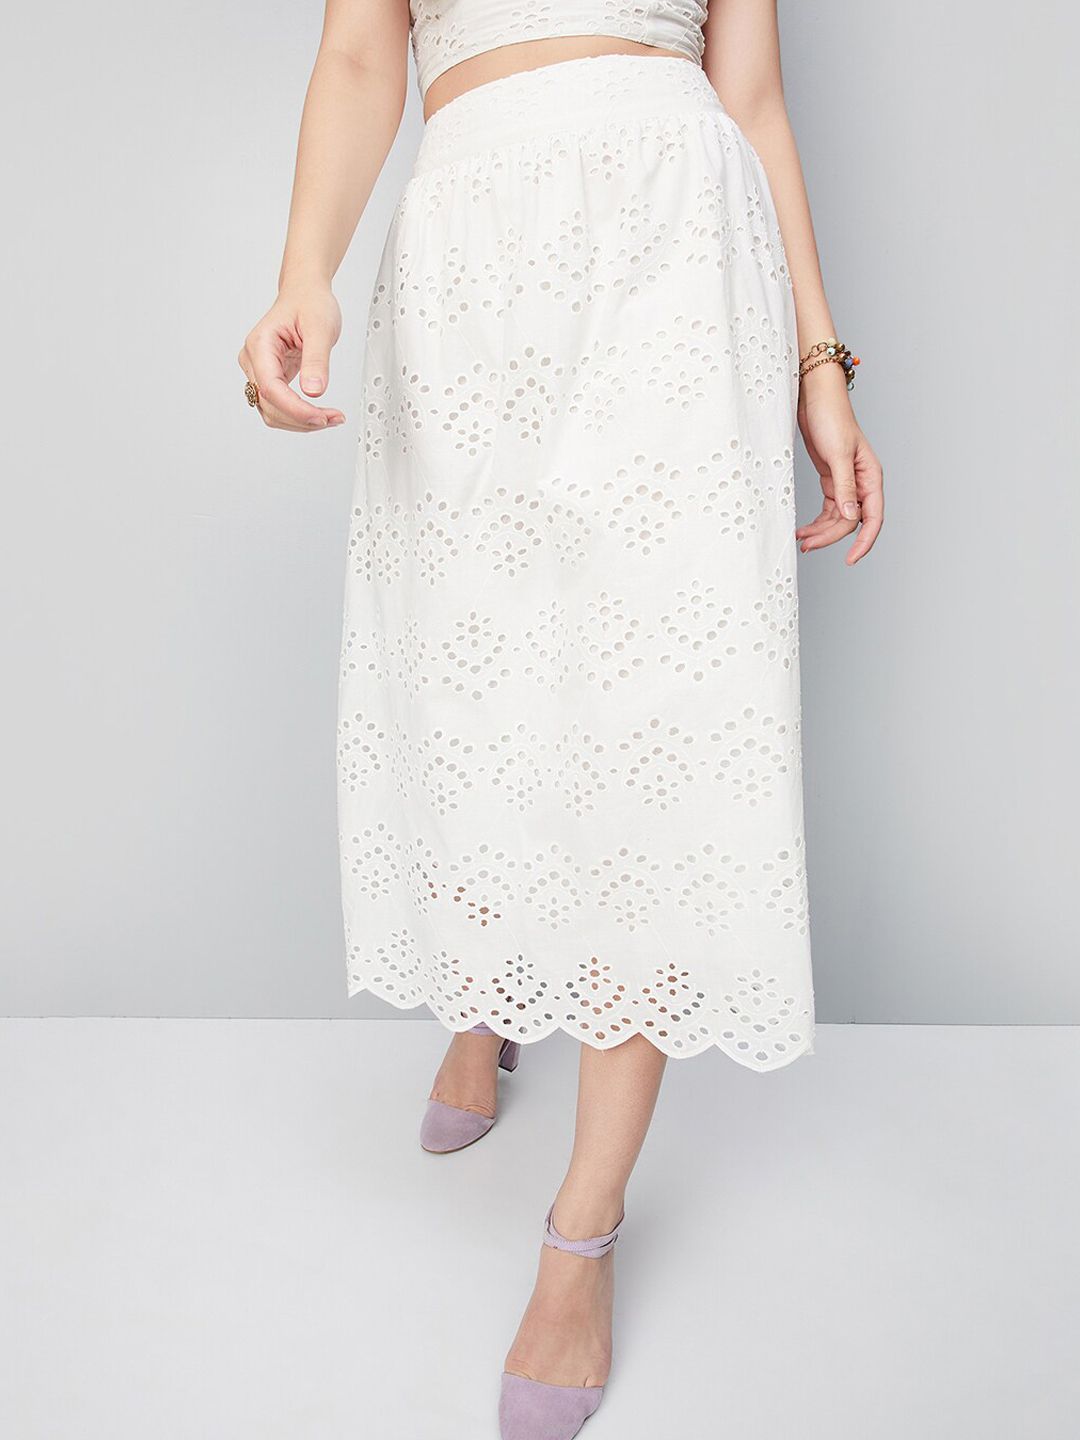 max Self Design Cotton Staright A-Line Skirt Price in India